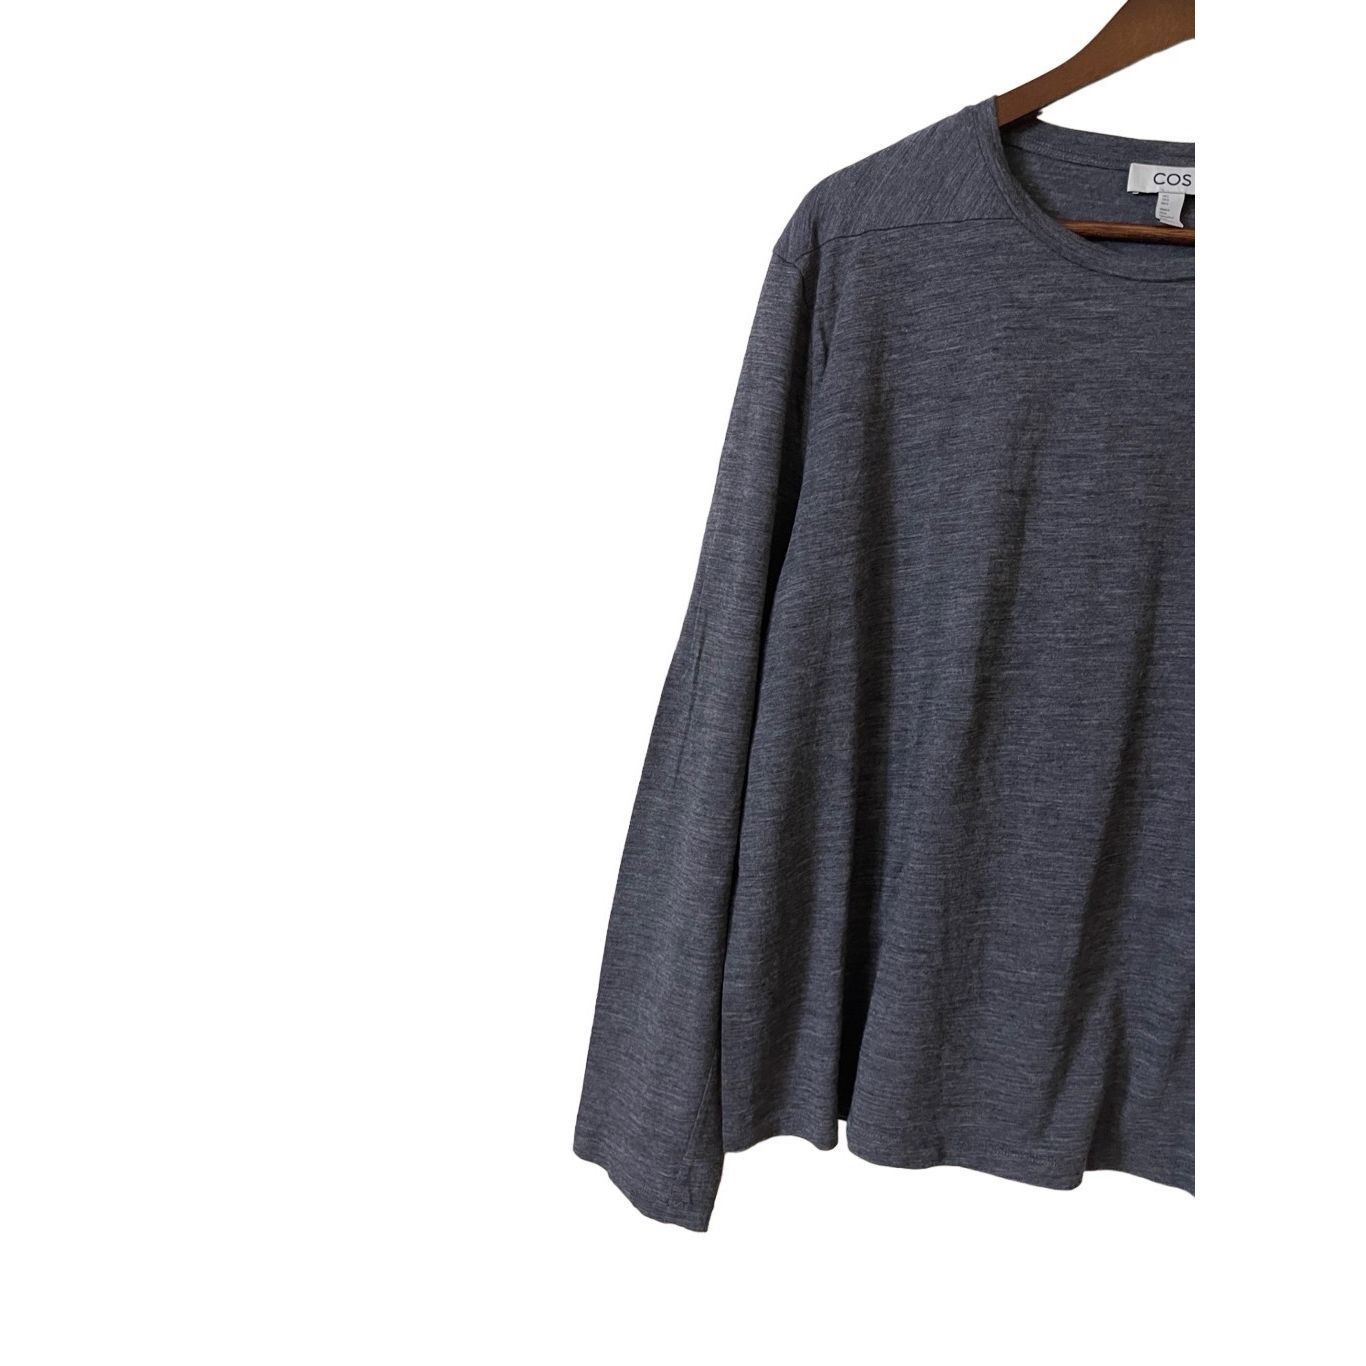 Cos COS 100% Wool Grey Crewneck Long Sleeve Lightweight Sweater Size US L / EU 52-54 / 3 - 6 Thumbnail